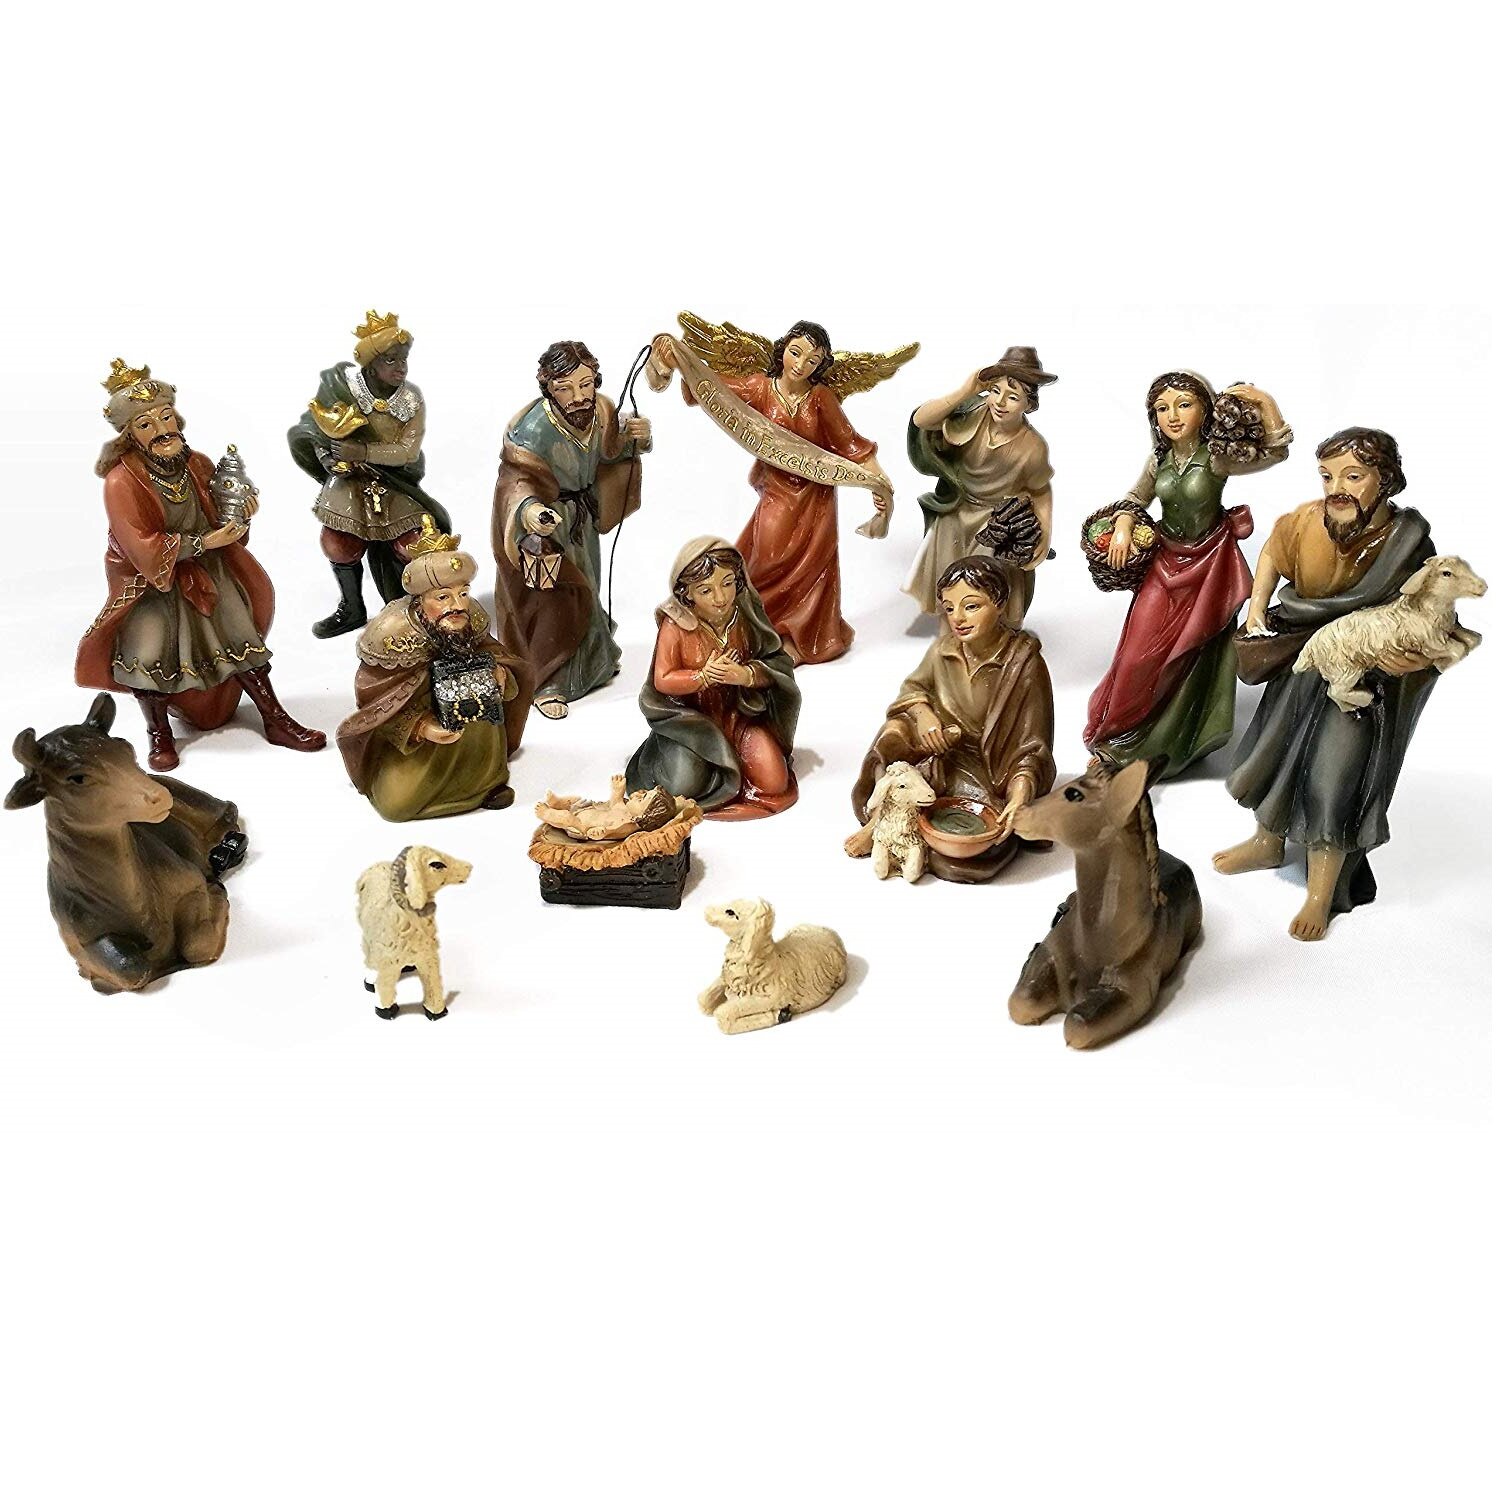 15 Piece Hand-Painted Nativity Set